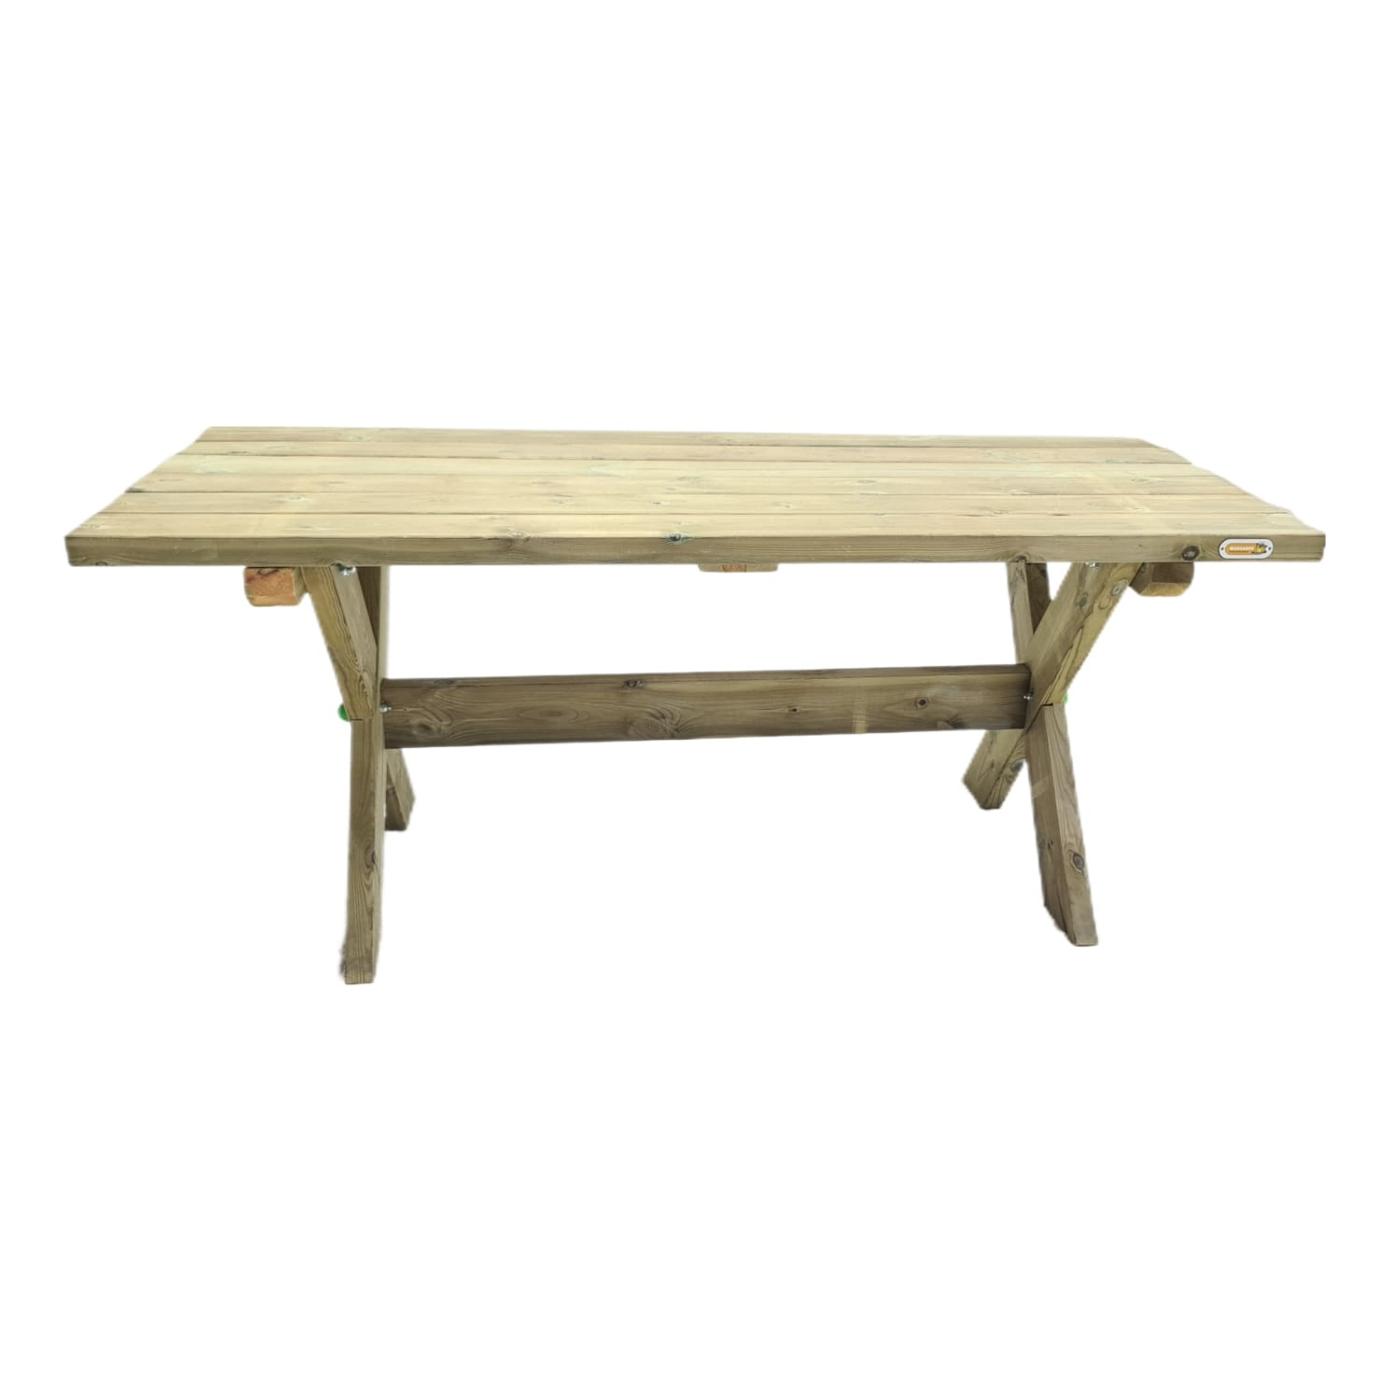 Mesa de madera para exterior XERTA con bancos con respaldo VIC de la marca MASGAMES